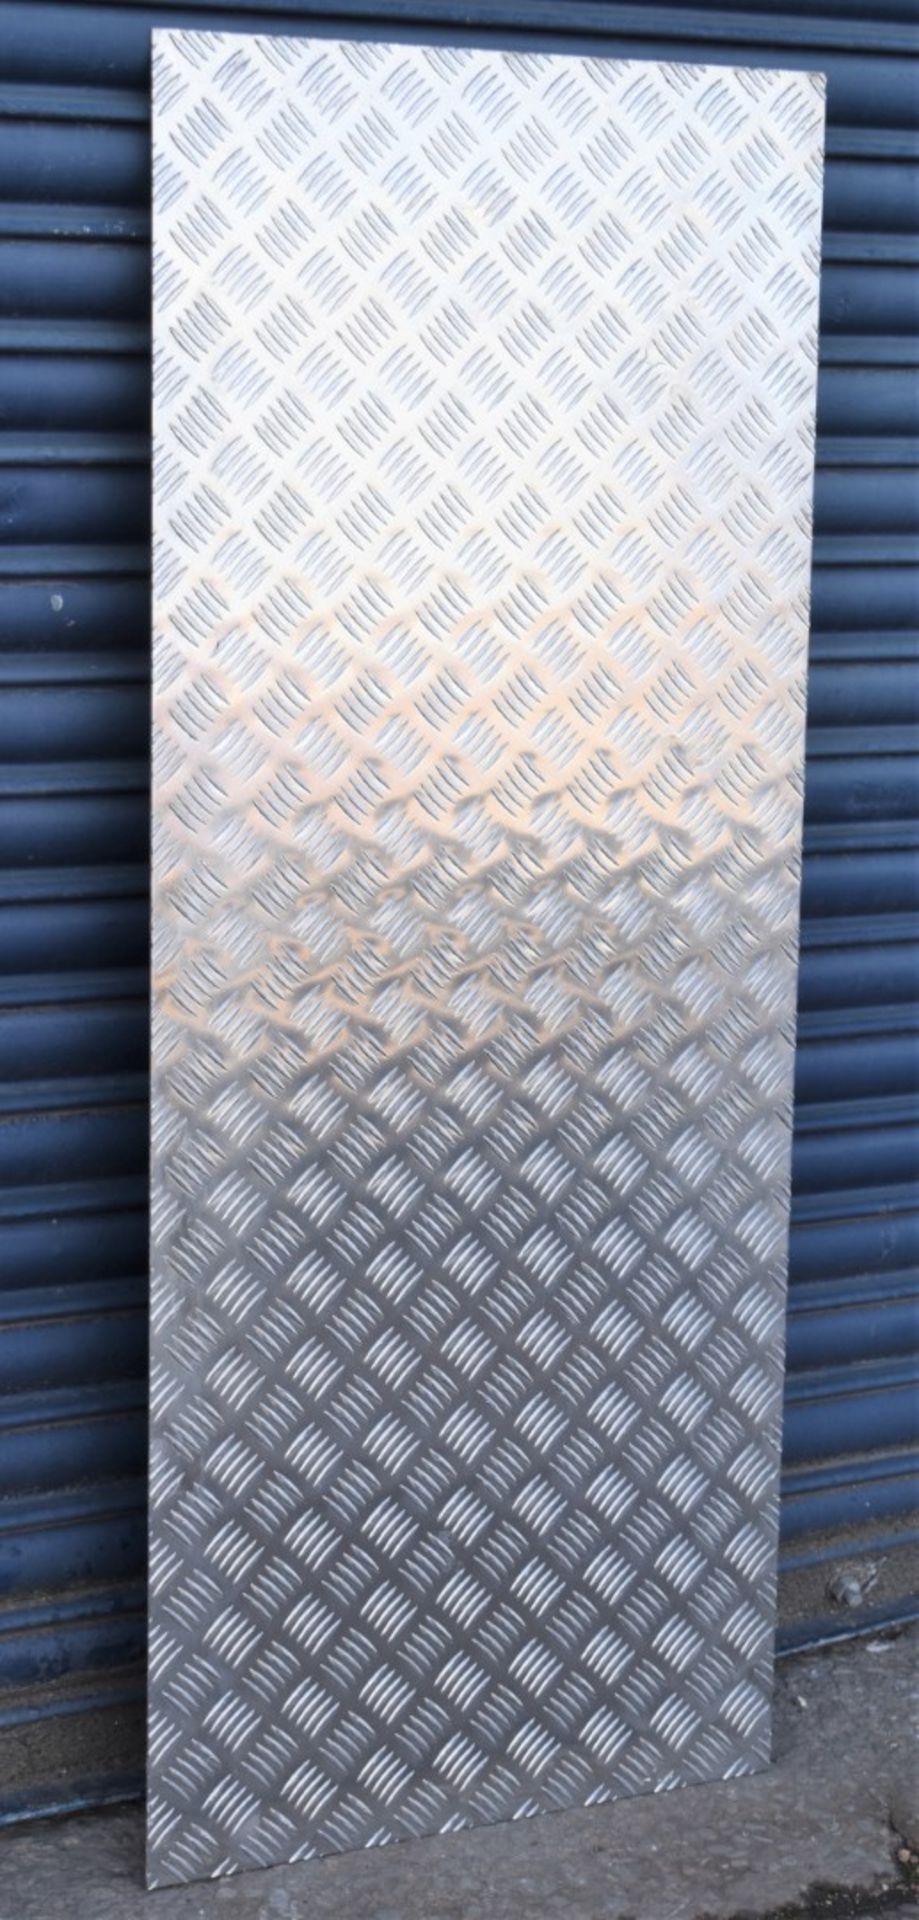 4 x Aluminium Tread Checker Plates - Size 125 x 50.5 x 0.3 cms - None Slip Floor Plate Suitable - Image 2 of 8